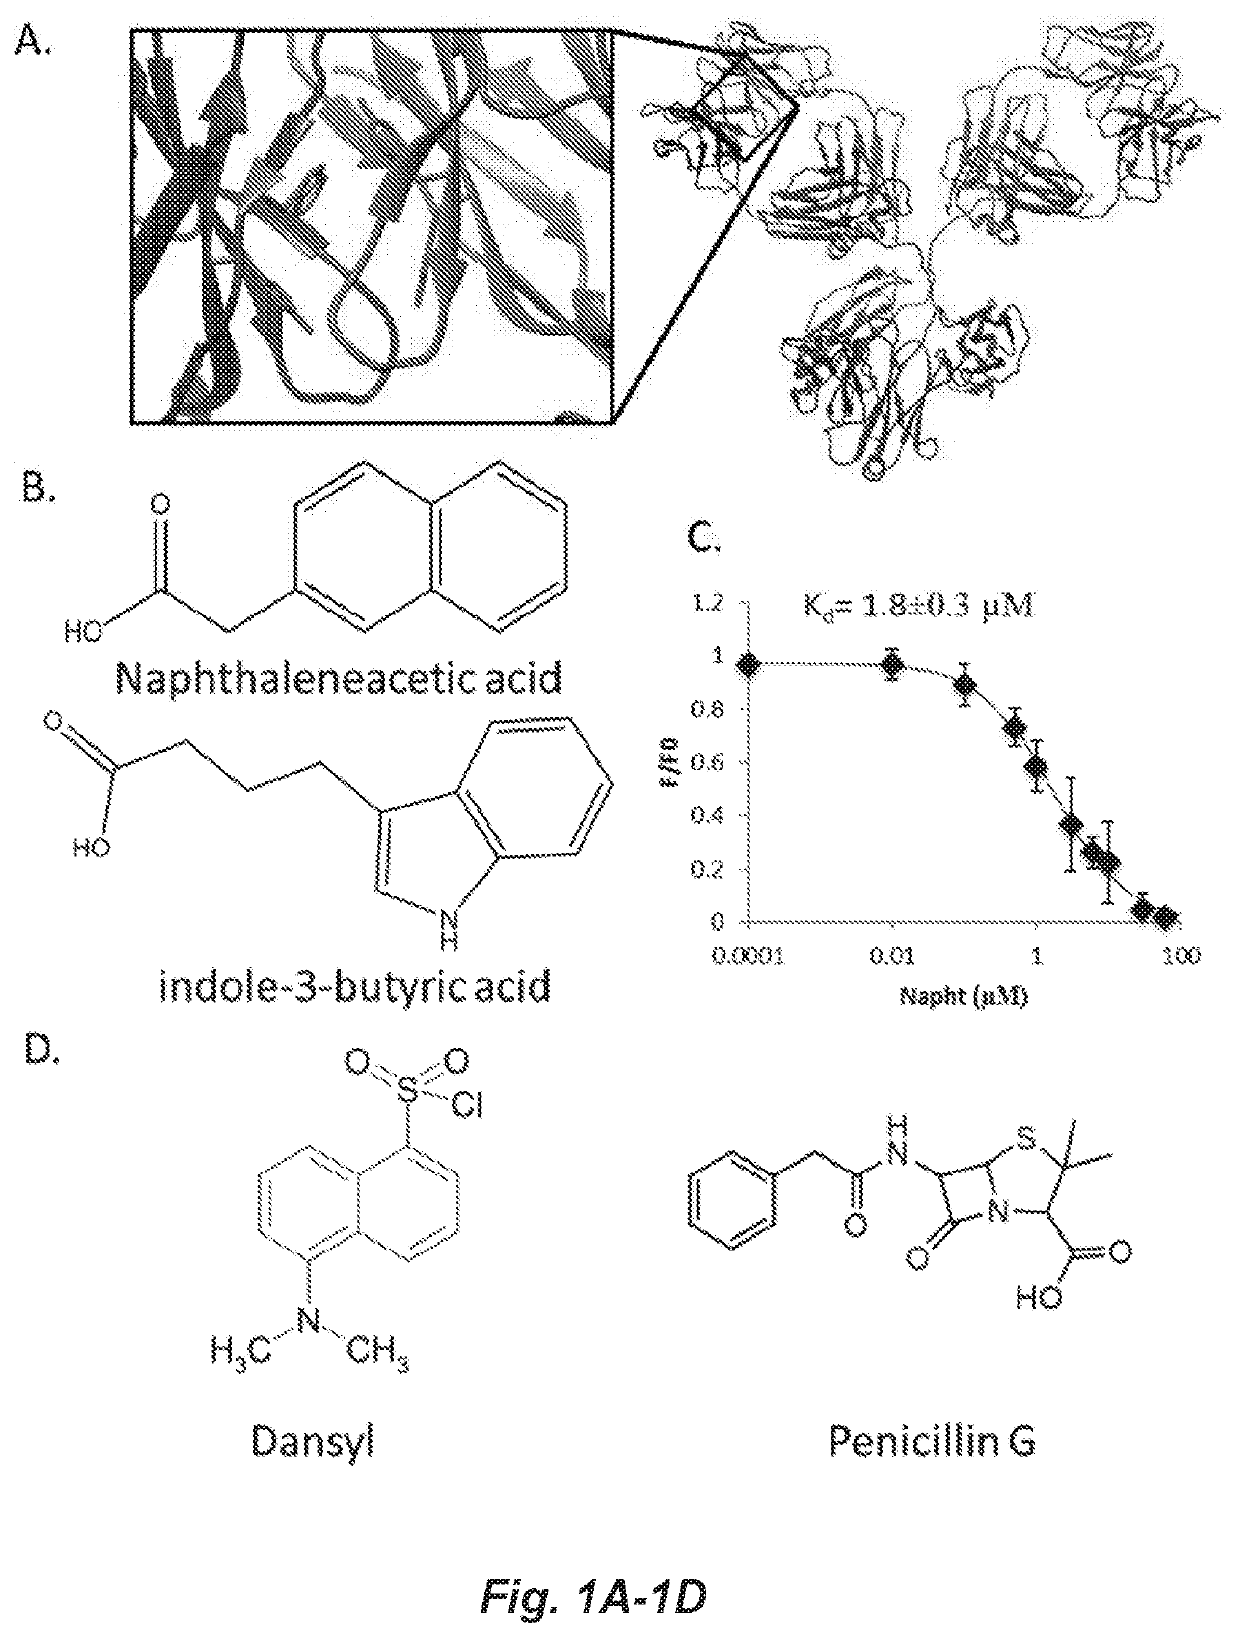 Covalent heterobivalent antibody inhibitors and ligands